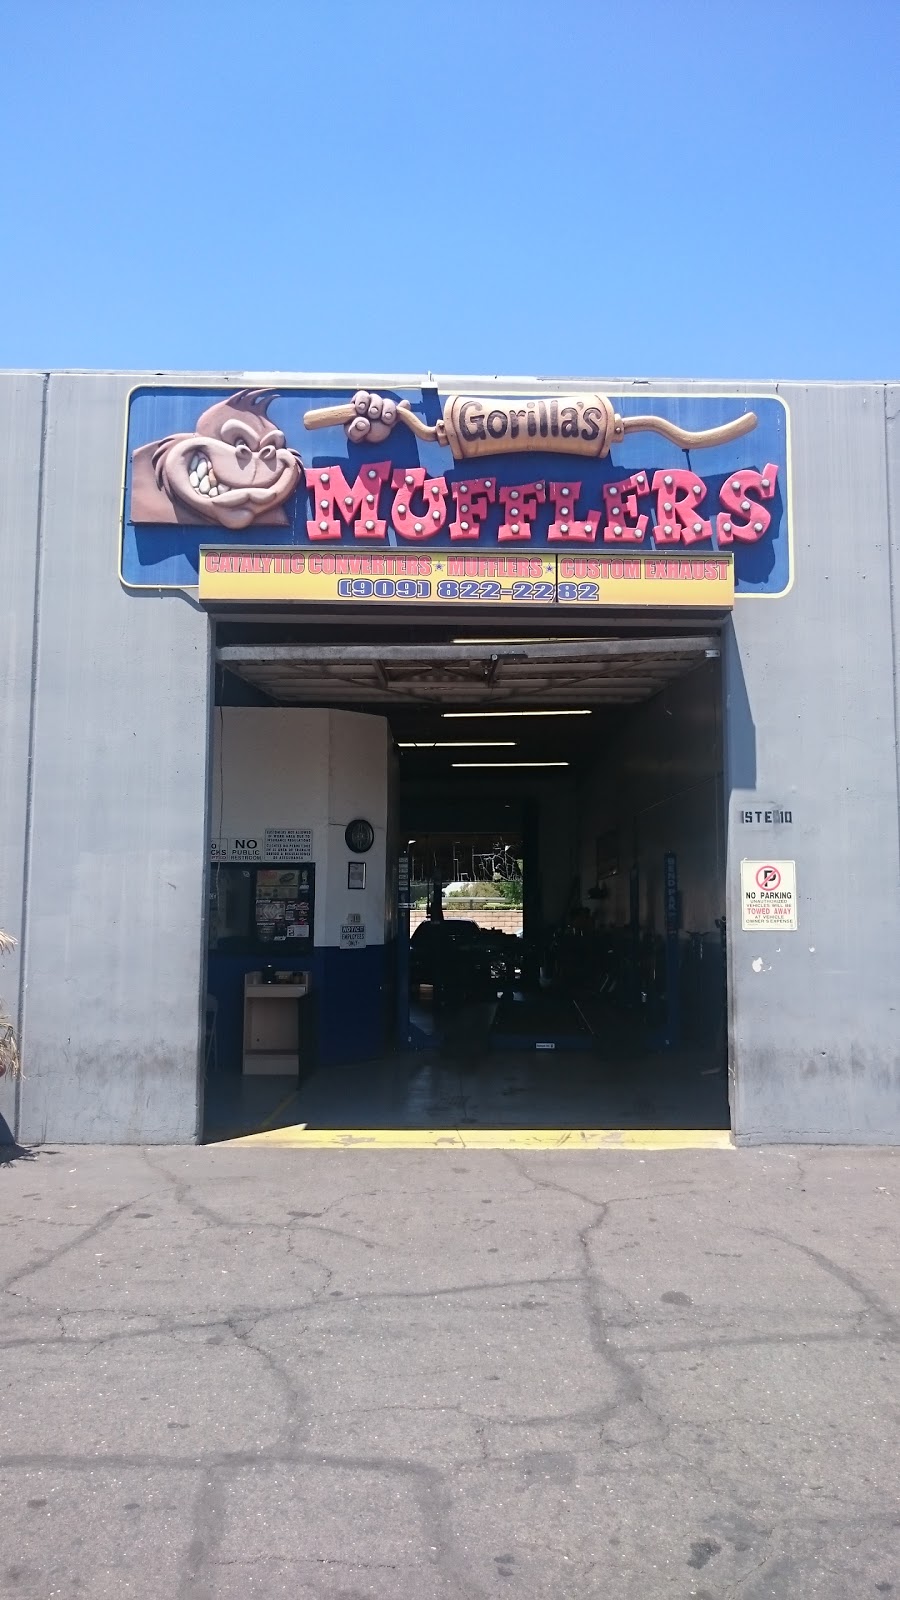 Gorillas Mufflers | 9530 Sierra Ave #10, Fontana, CA 92335 | Phone: (909) 822-2282